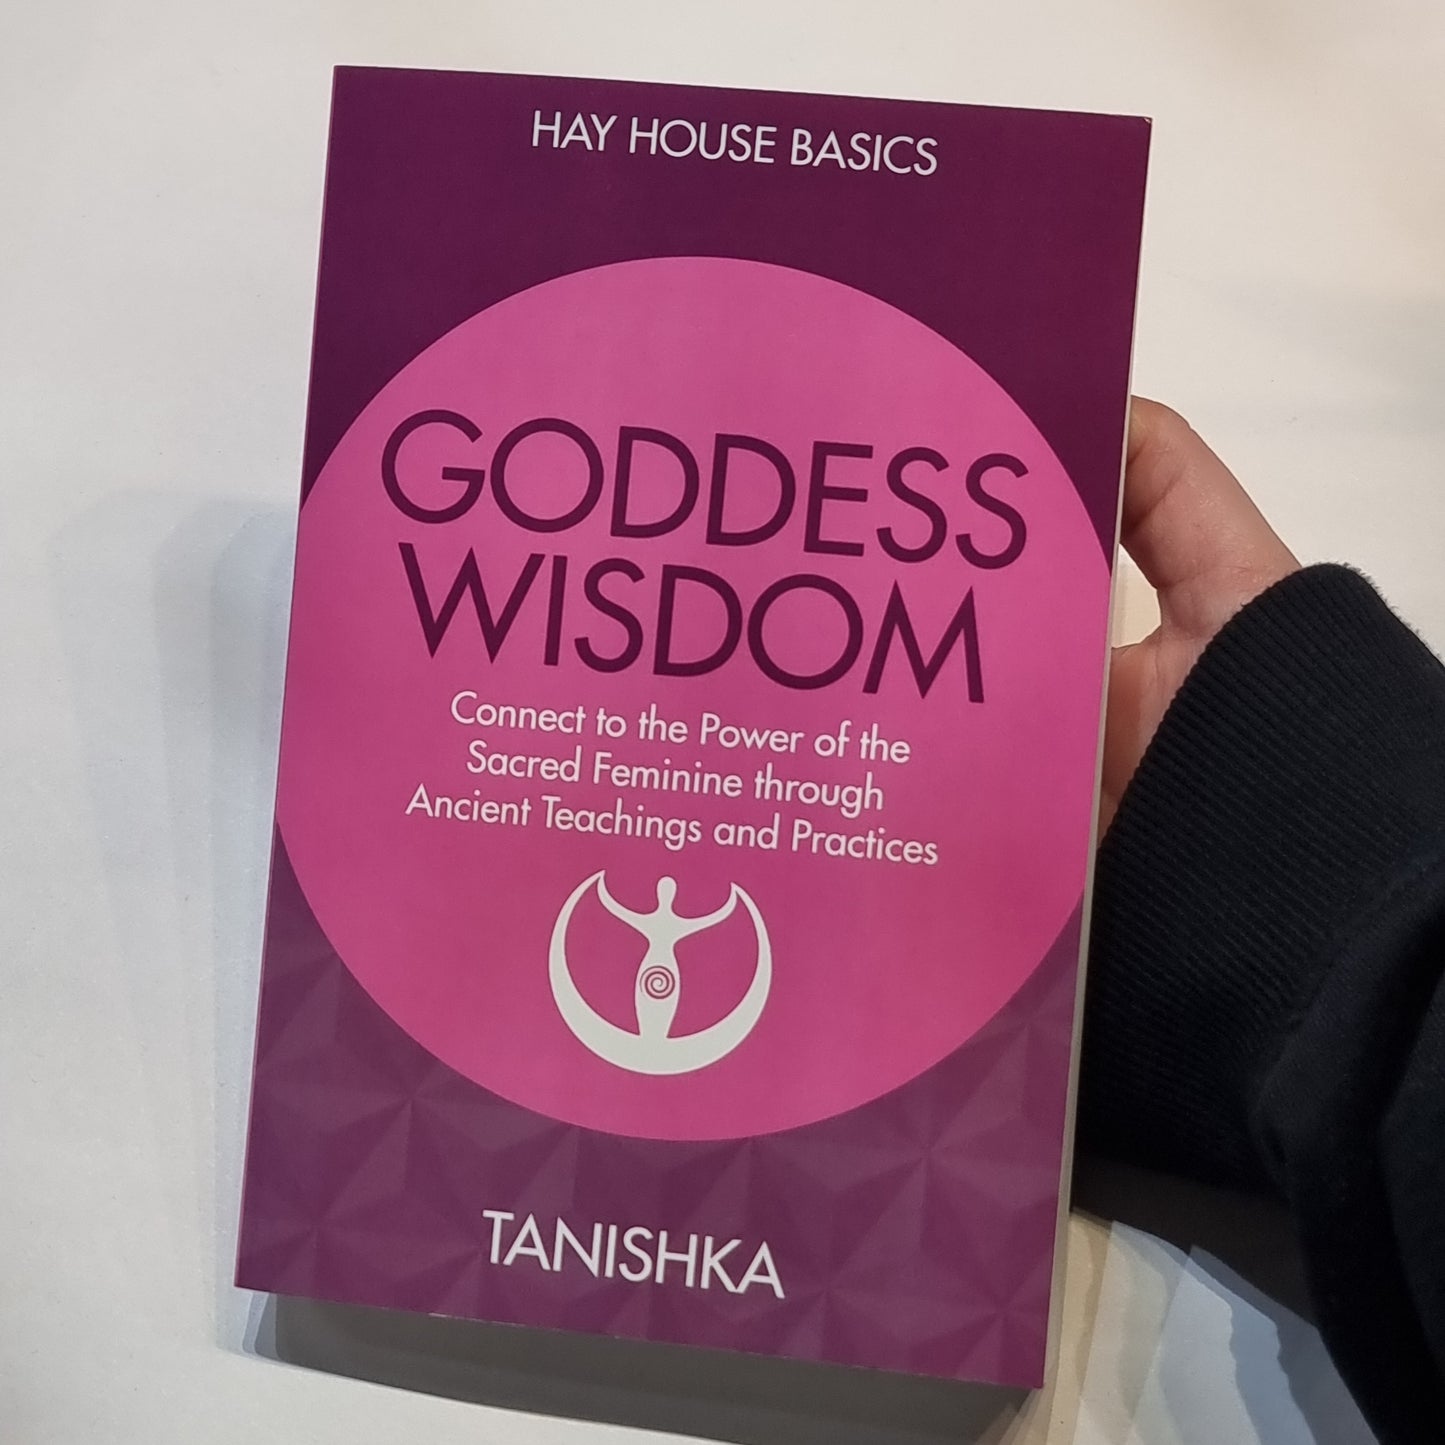 Hay house basics - goddess wisdom - Rivendell Shop